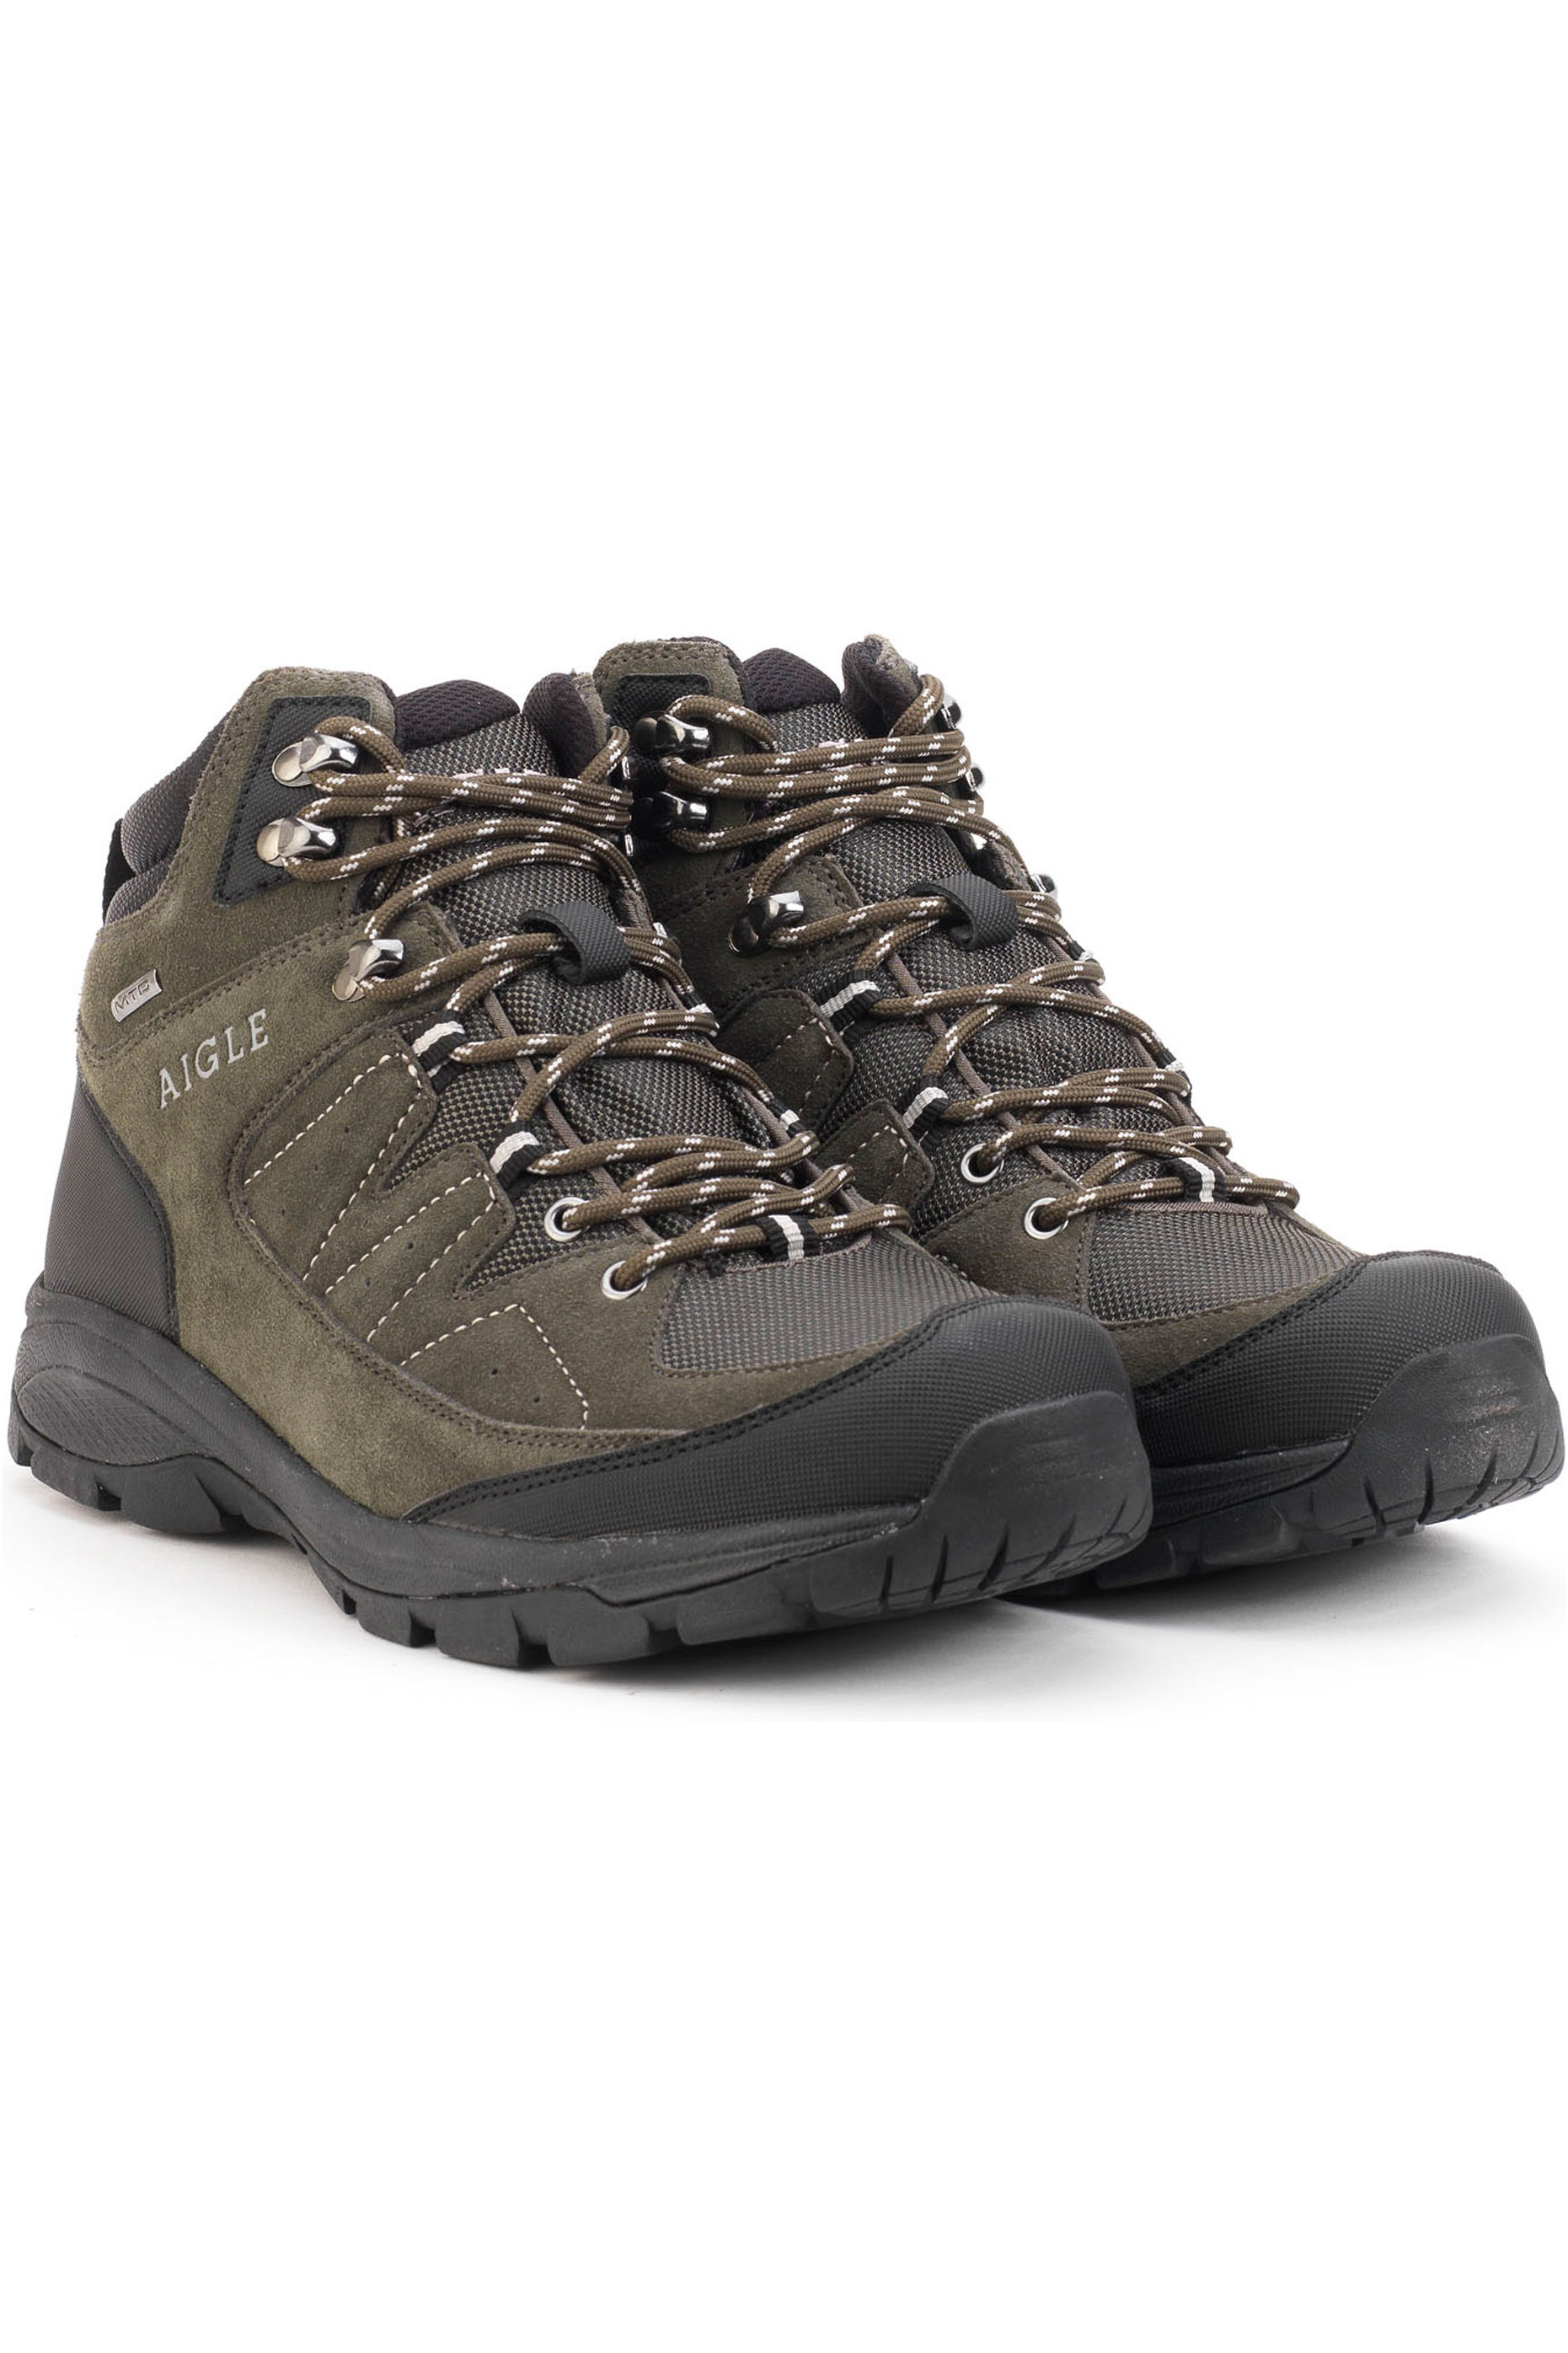 afgår forfader Kort levetid Aigle Vidur Mid Mens Waterproof MTD Boots Khaki / Black - T19176 - Mens -  Footwear | The Drillshed